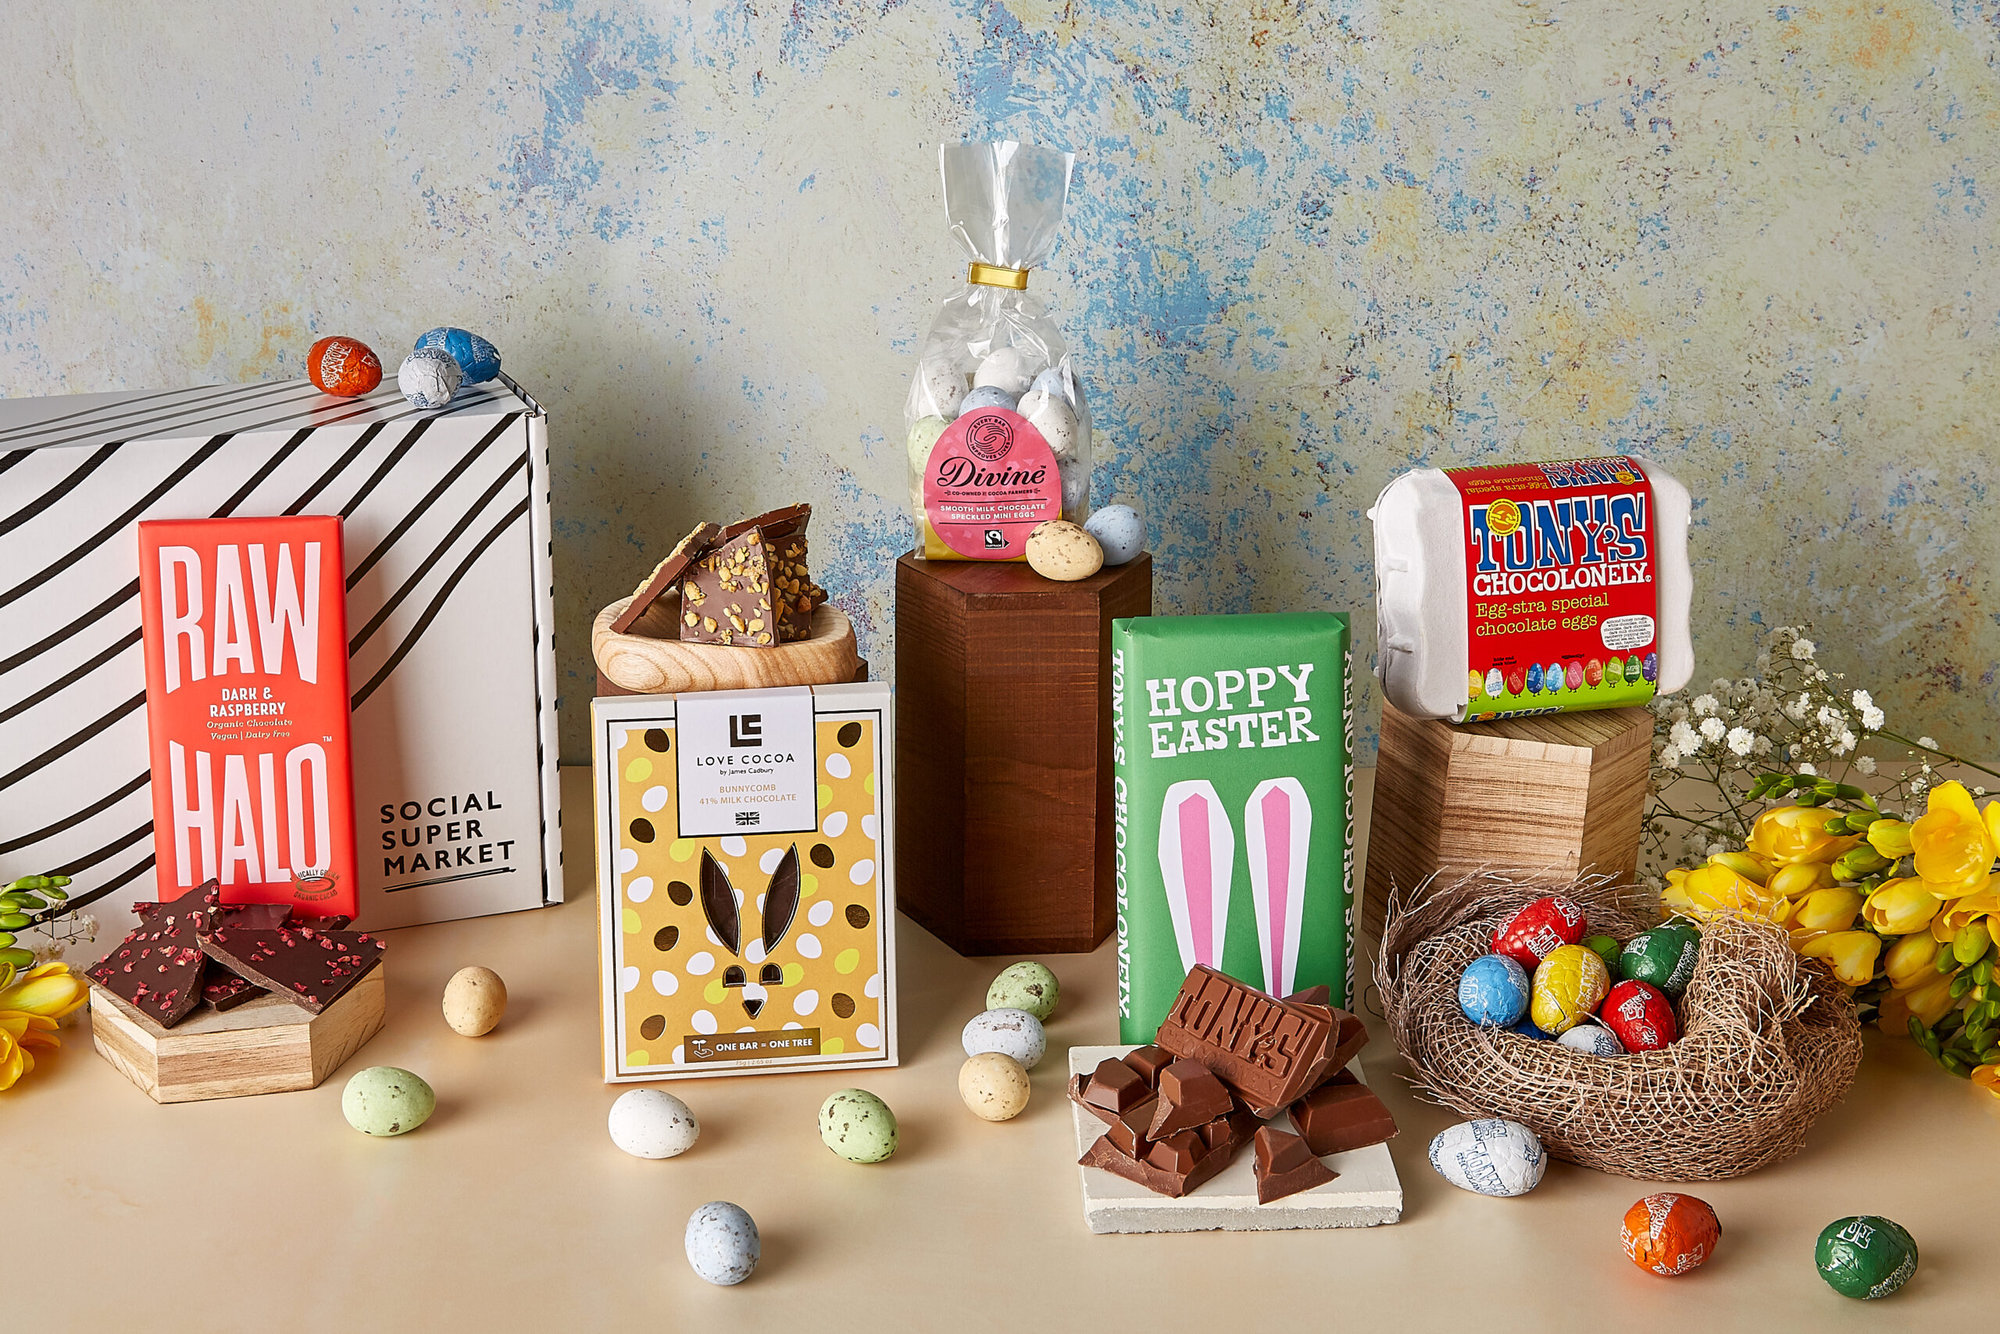 The Easter Egg Eco bundle